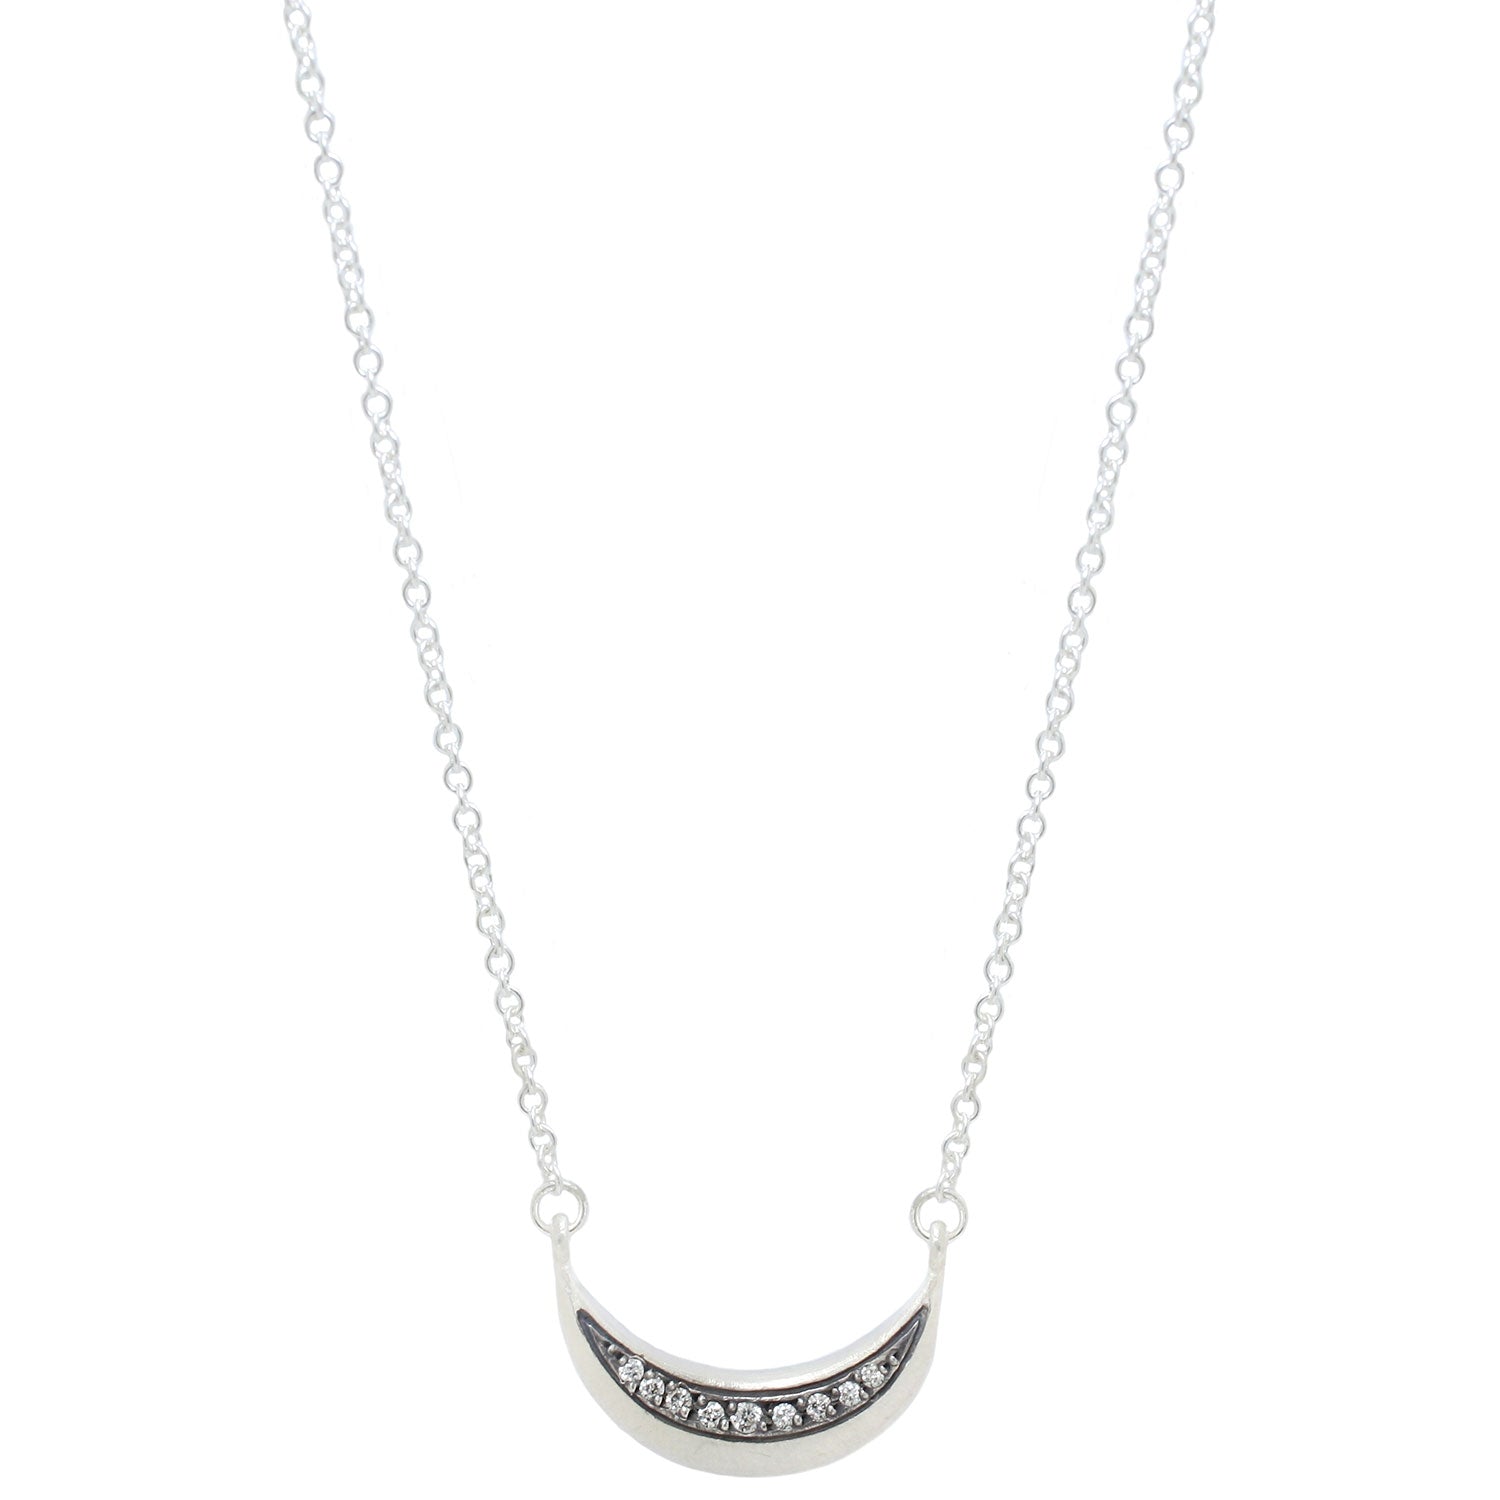 Sarah Swell Silver La Lune Diamond Necklace